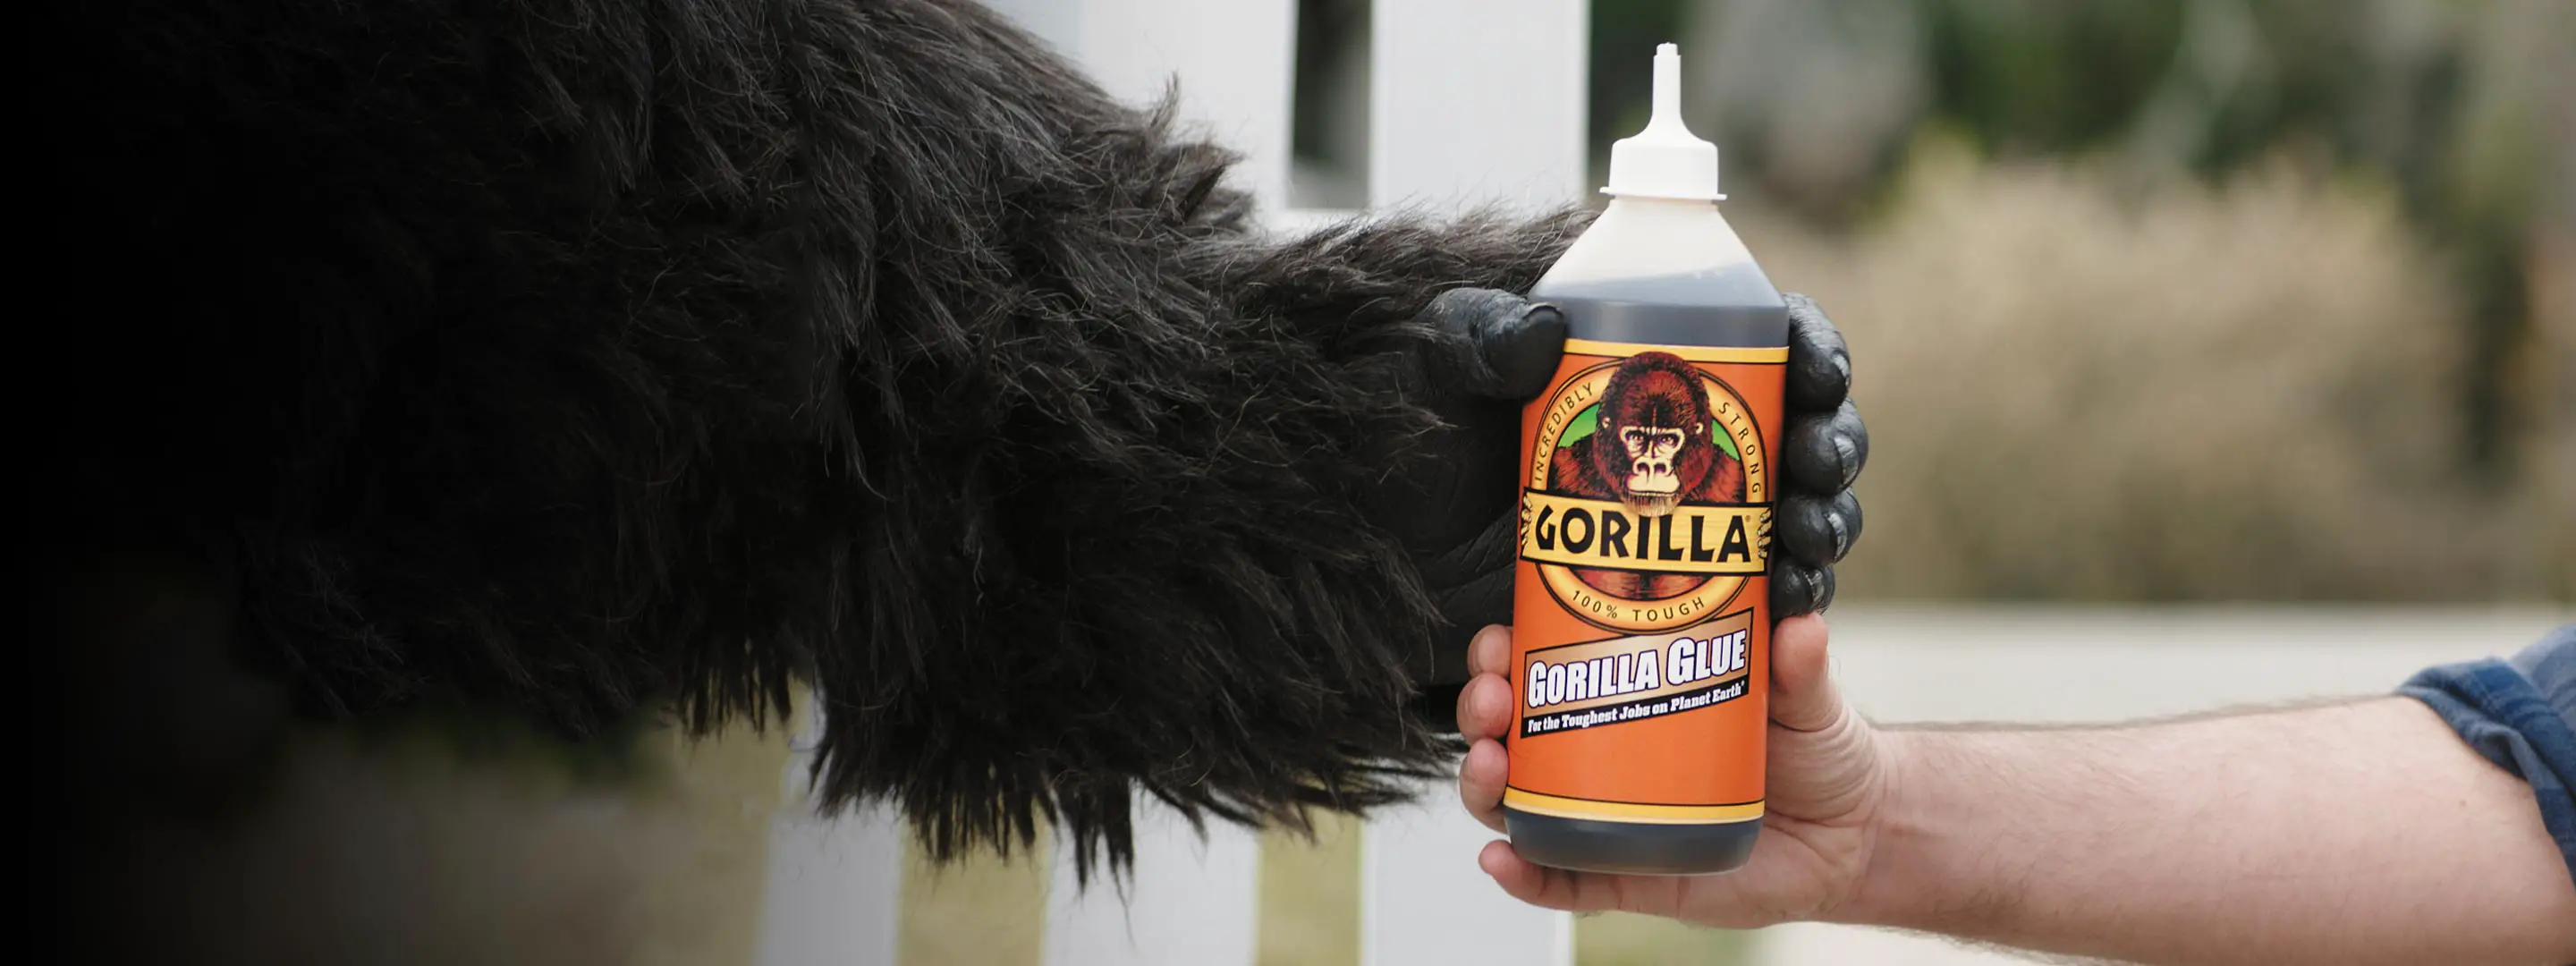 How Long Has Gorilla Glue Been Around